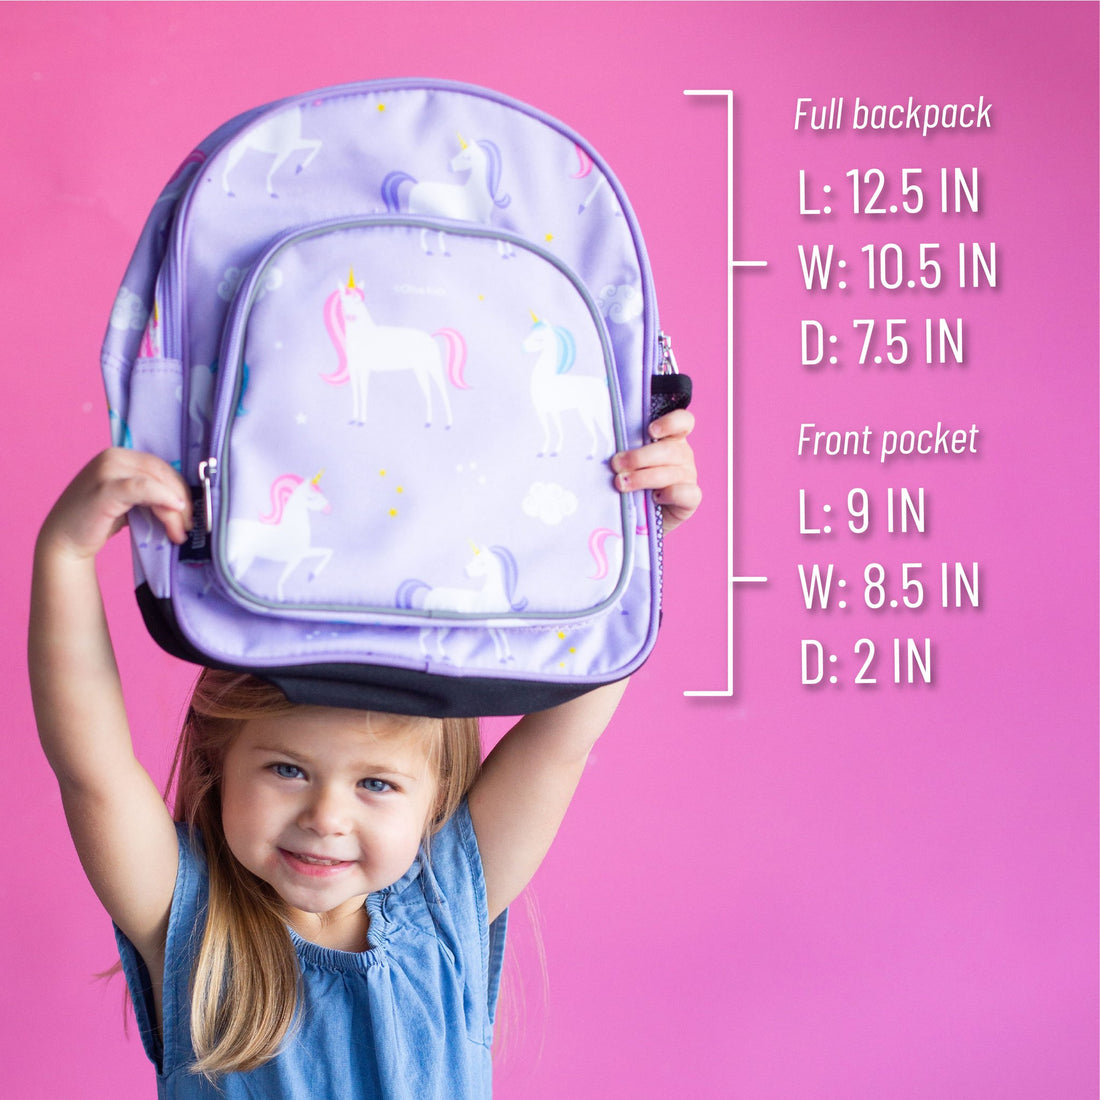 Unicorn 12 Inch Backpack